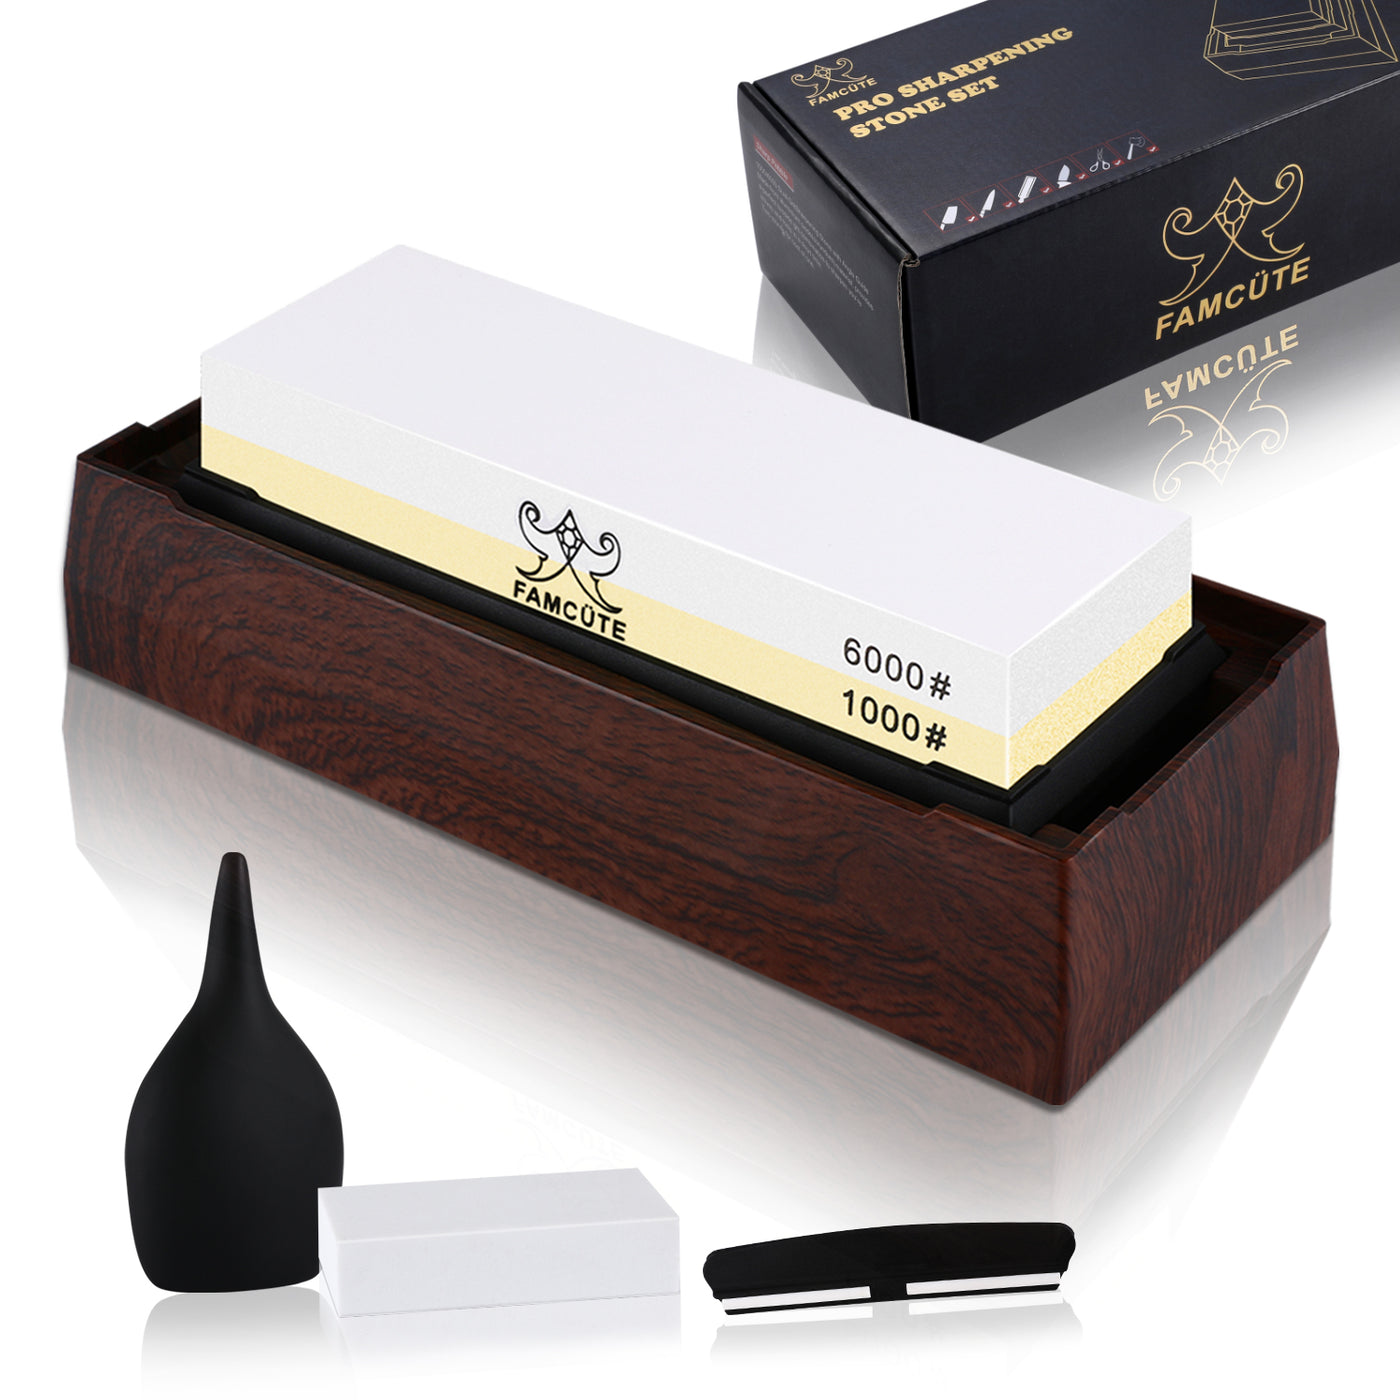 1000/6000 Dual Grit Whetstone Kit with Angle Guide & Bamboo Case – Senken  Knives